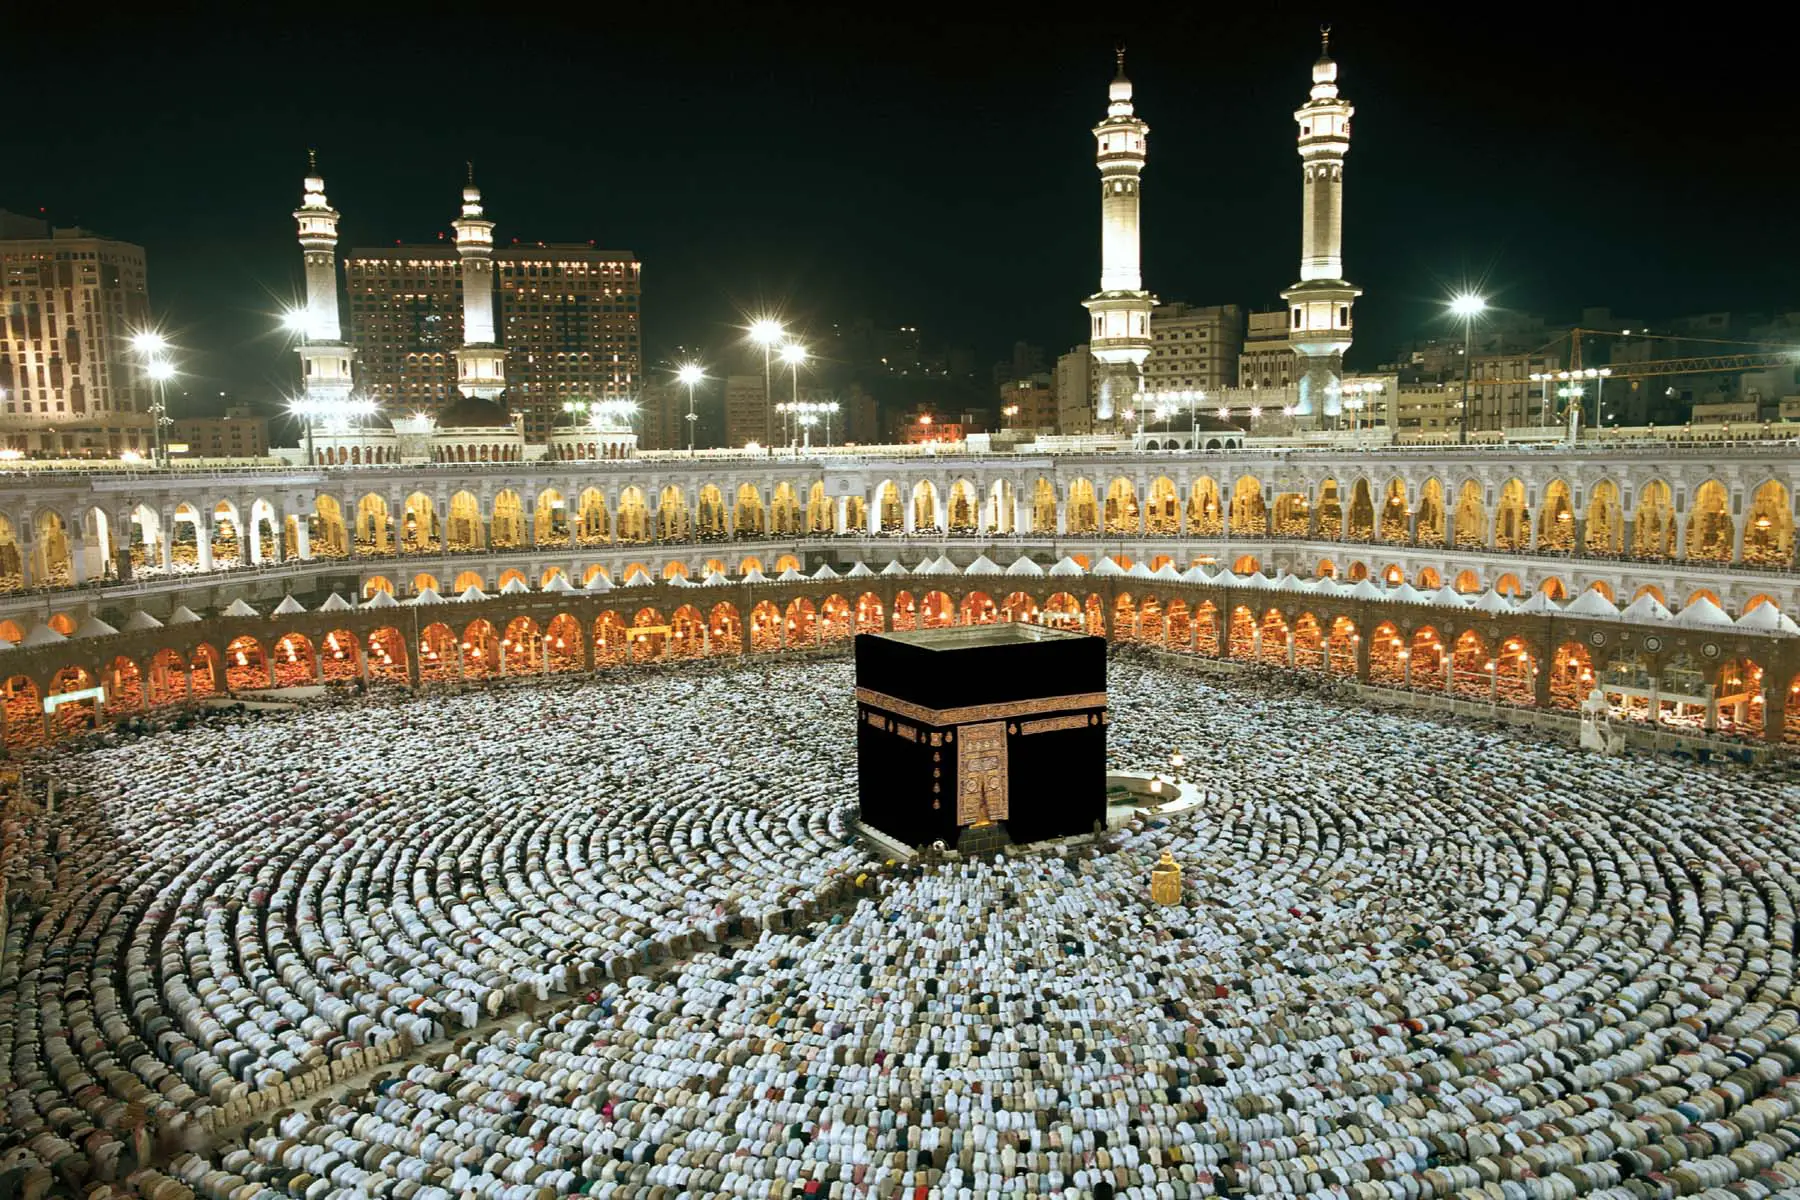 pilgrimage crowds in Mecca, Saudi Arabia